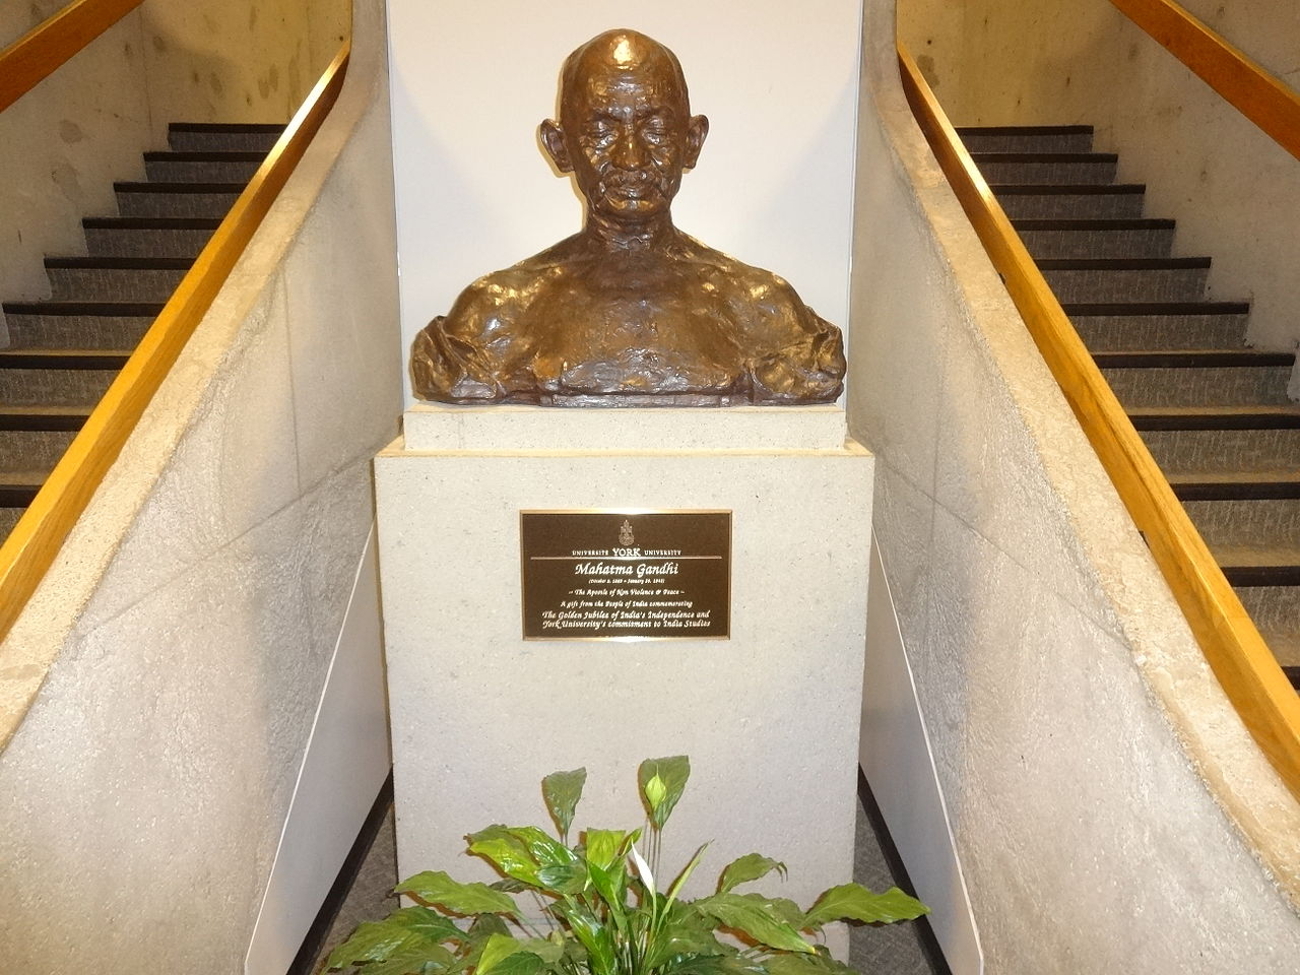 Gandhi's monument at York University